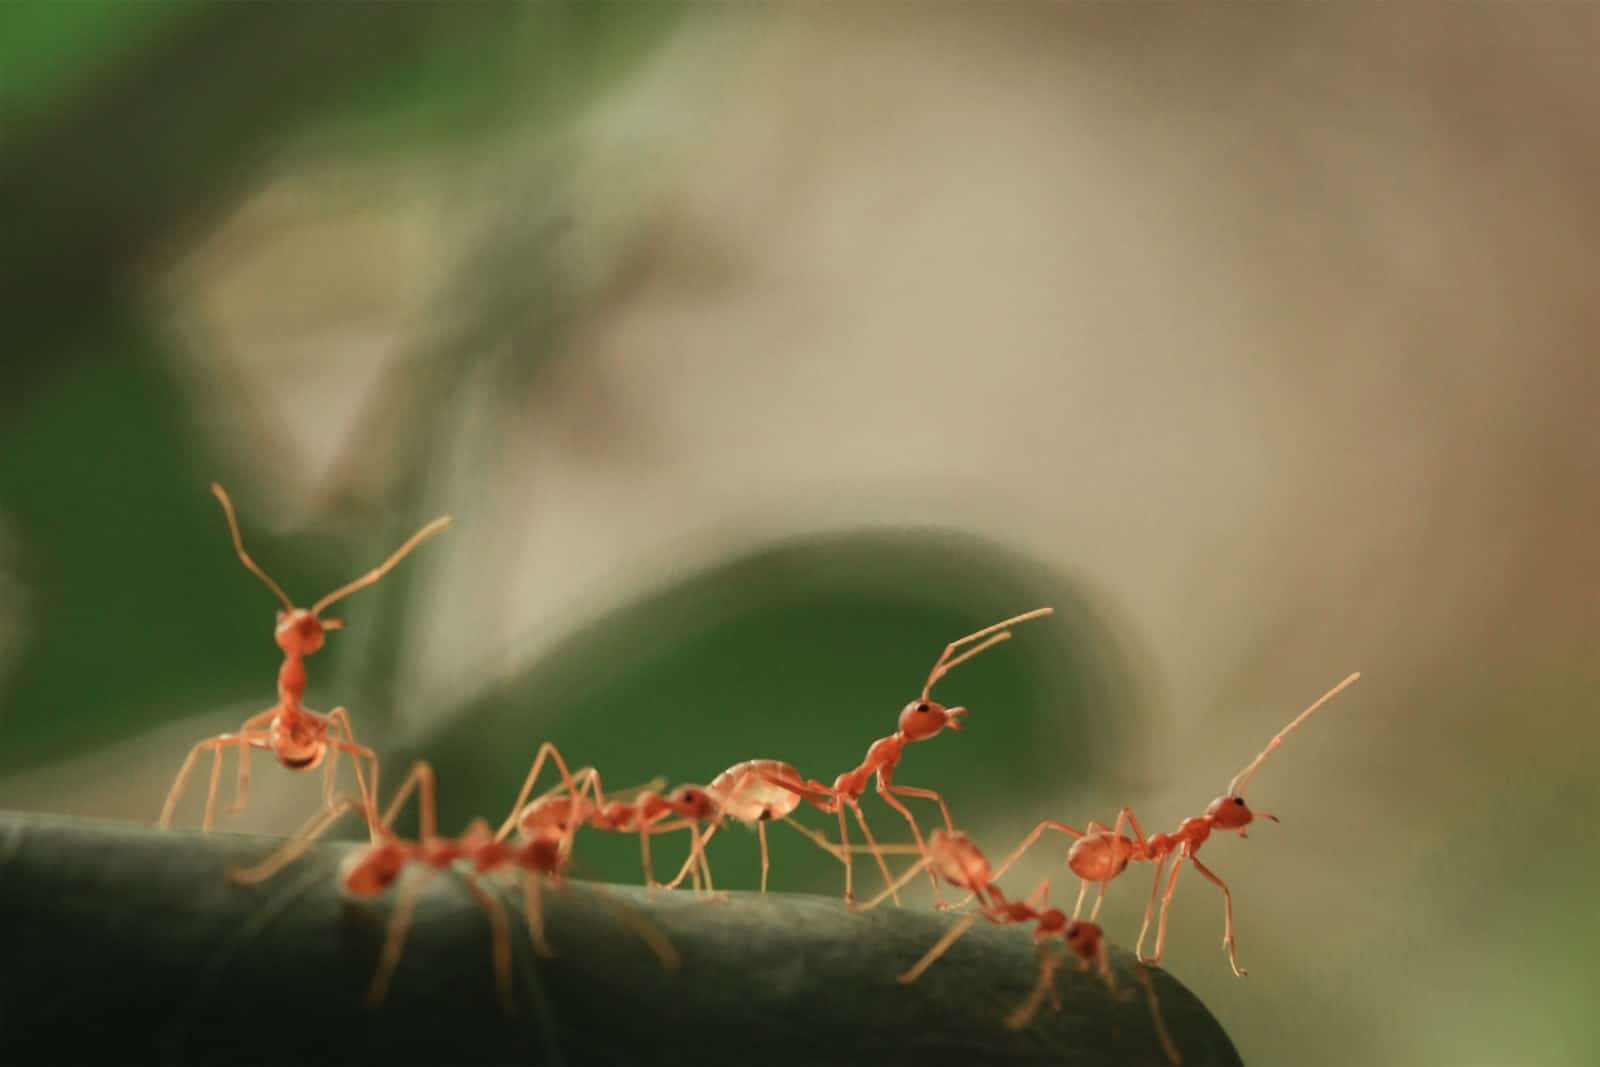 Ants hunting food